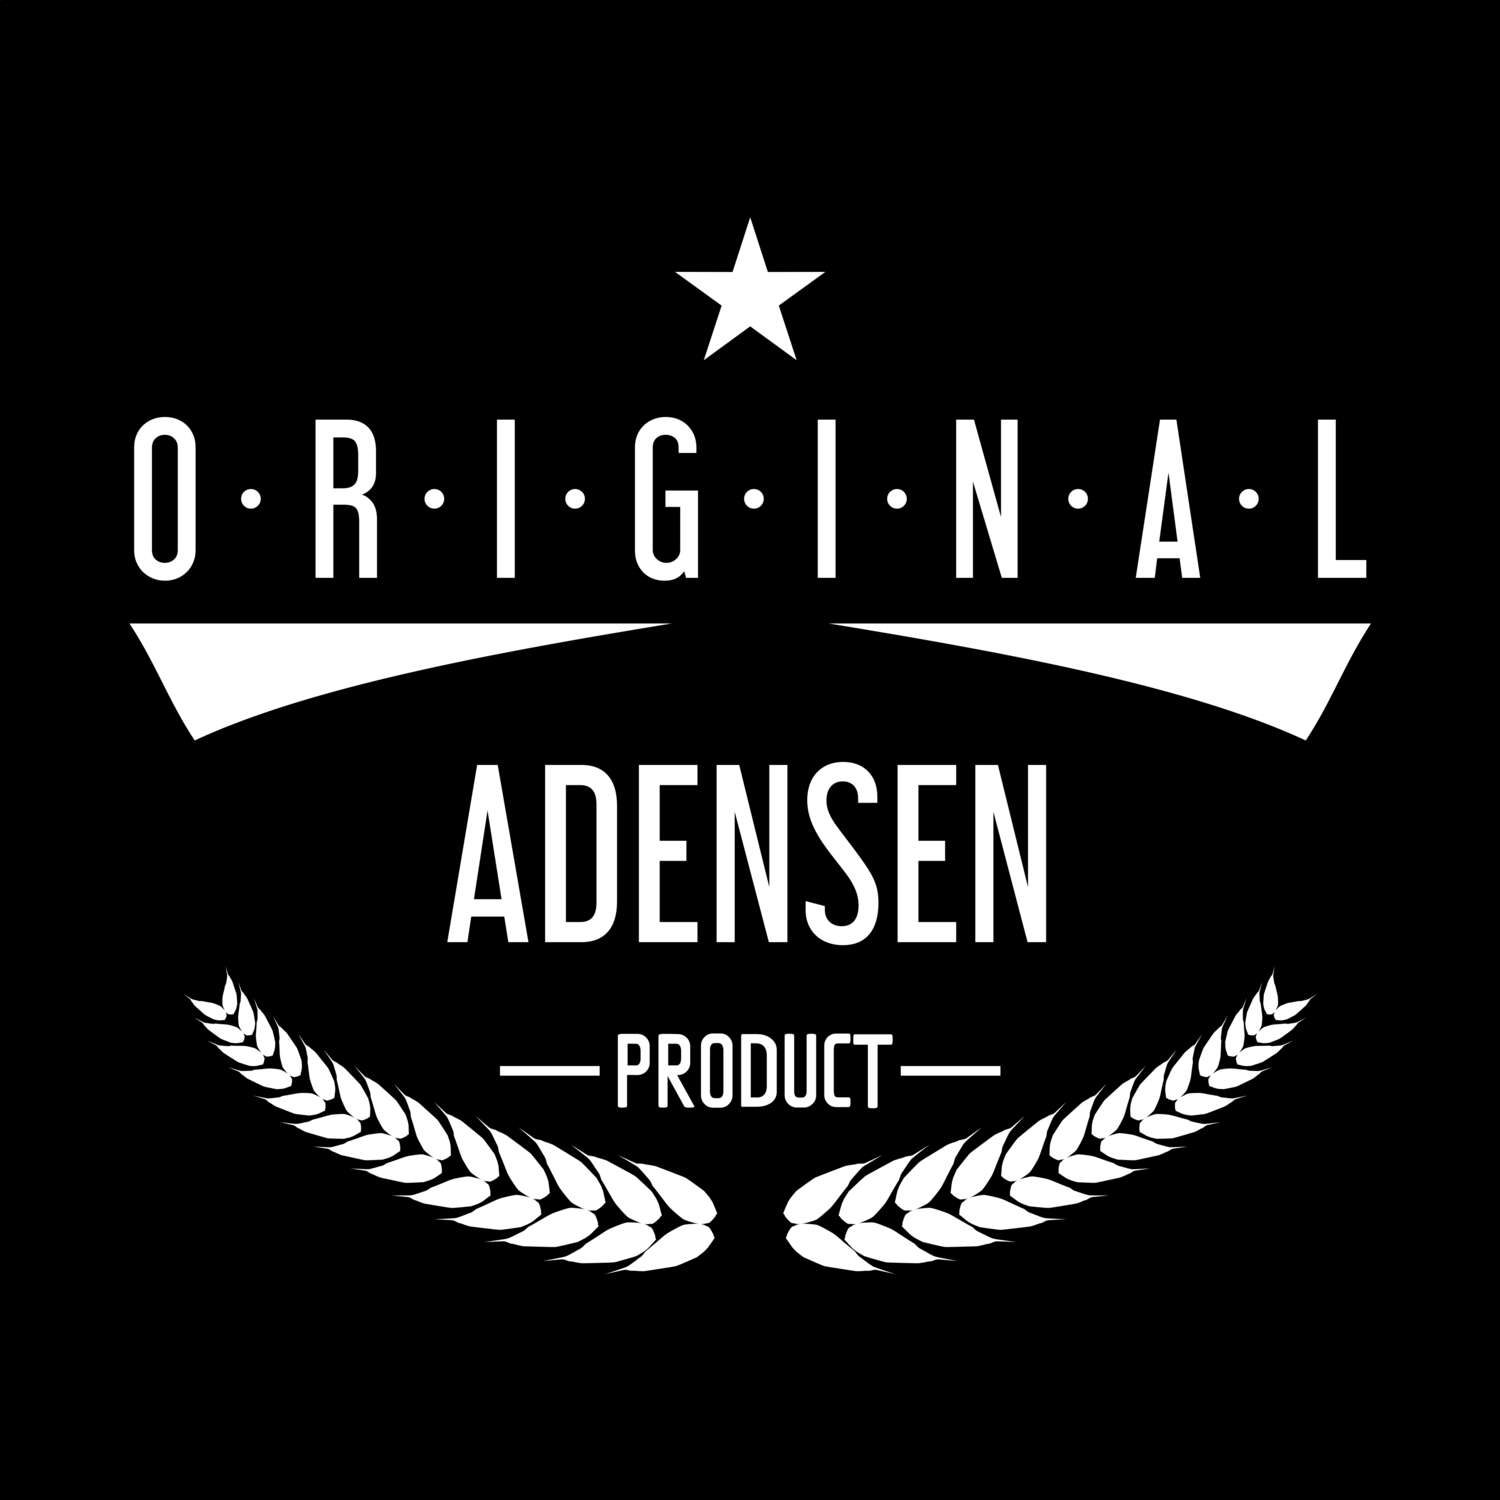 Adensen T-Shirt »Original Product«